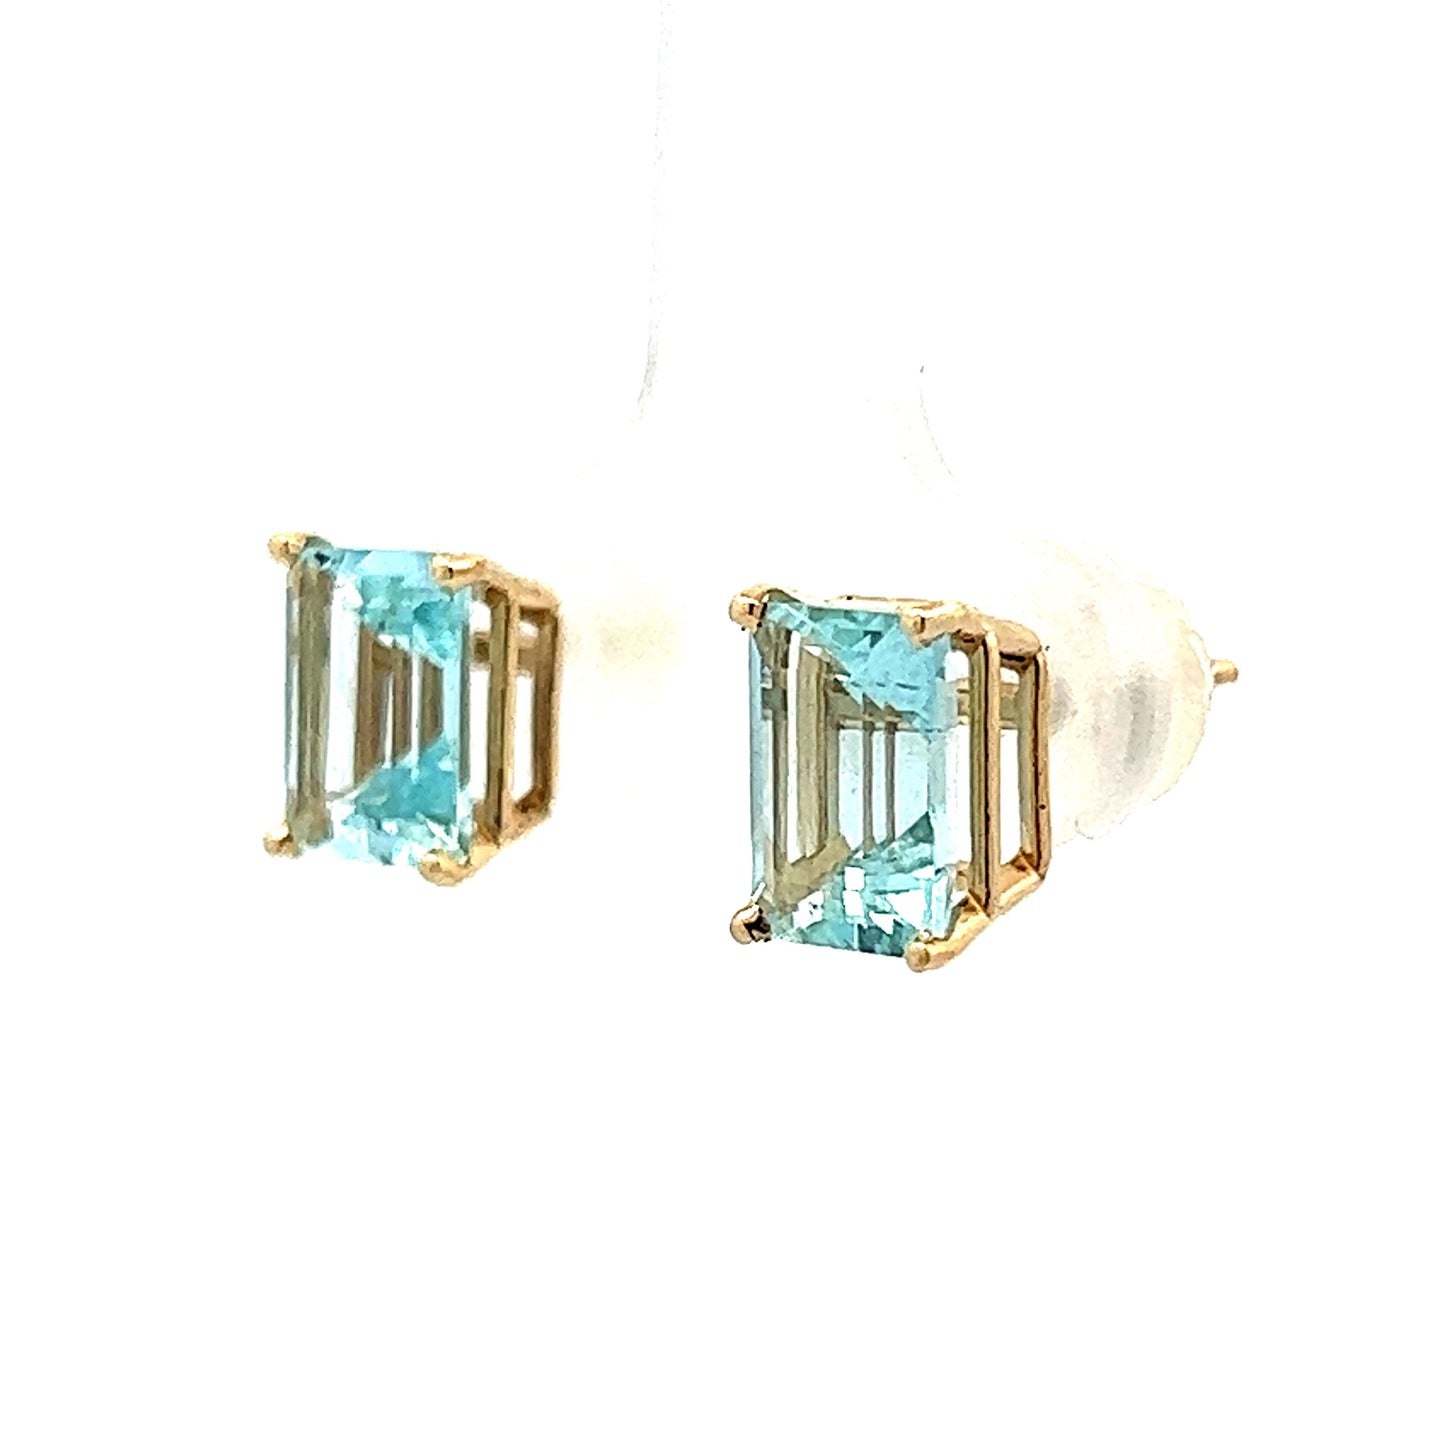 3.09 Emerald Cut Aquamarine Earrings in Yellow Gold